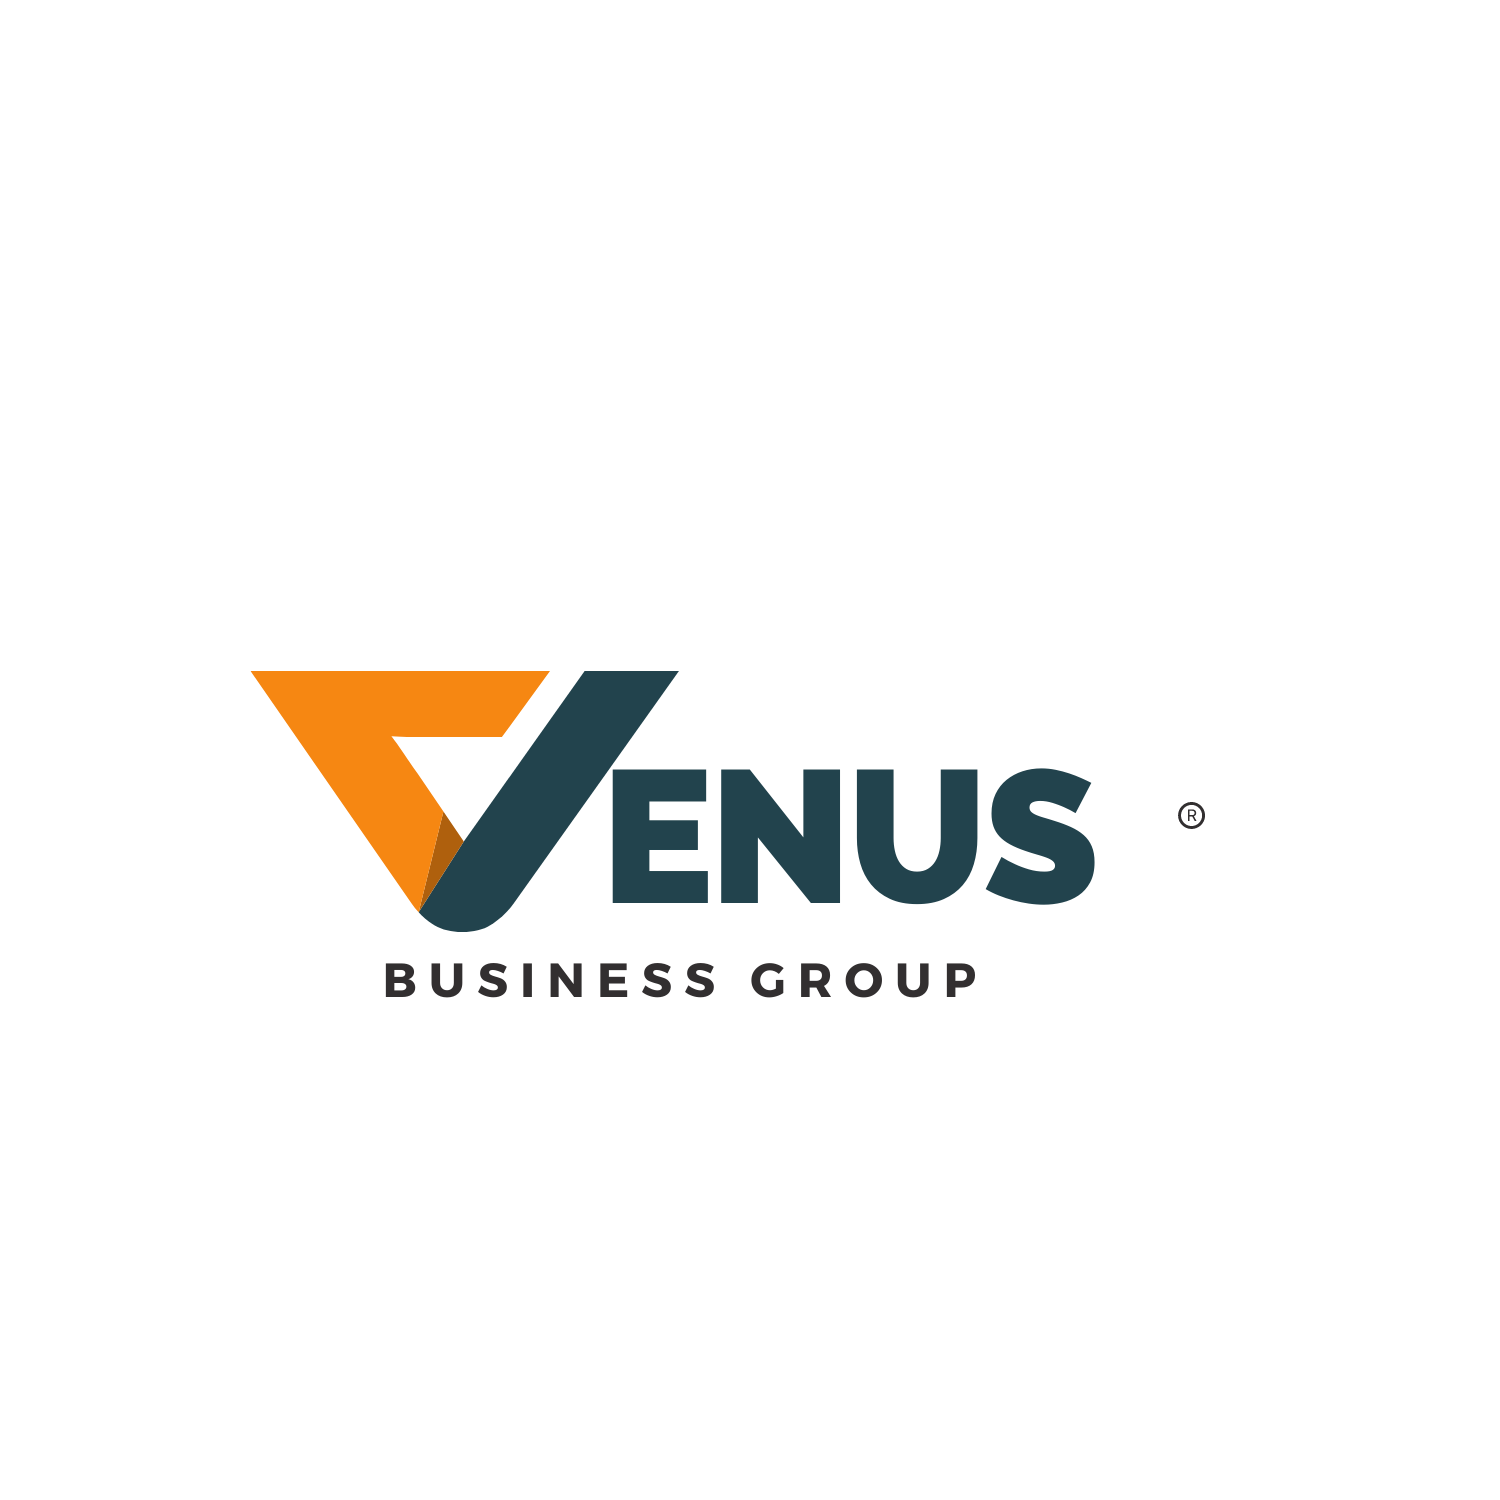 Venus Business Group